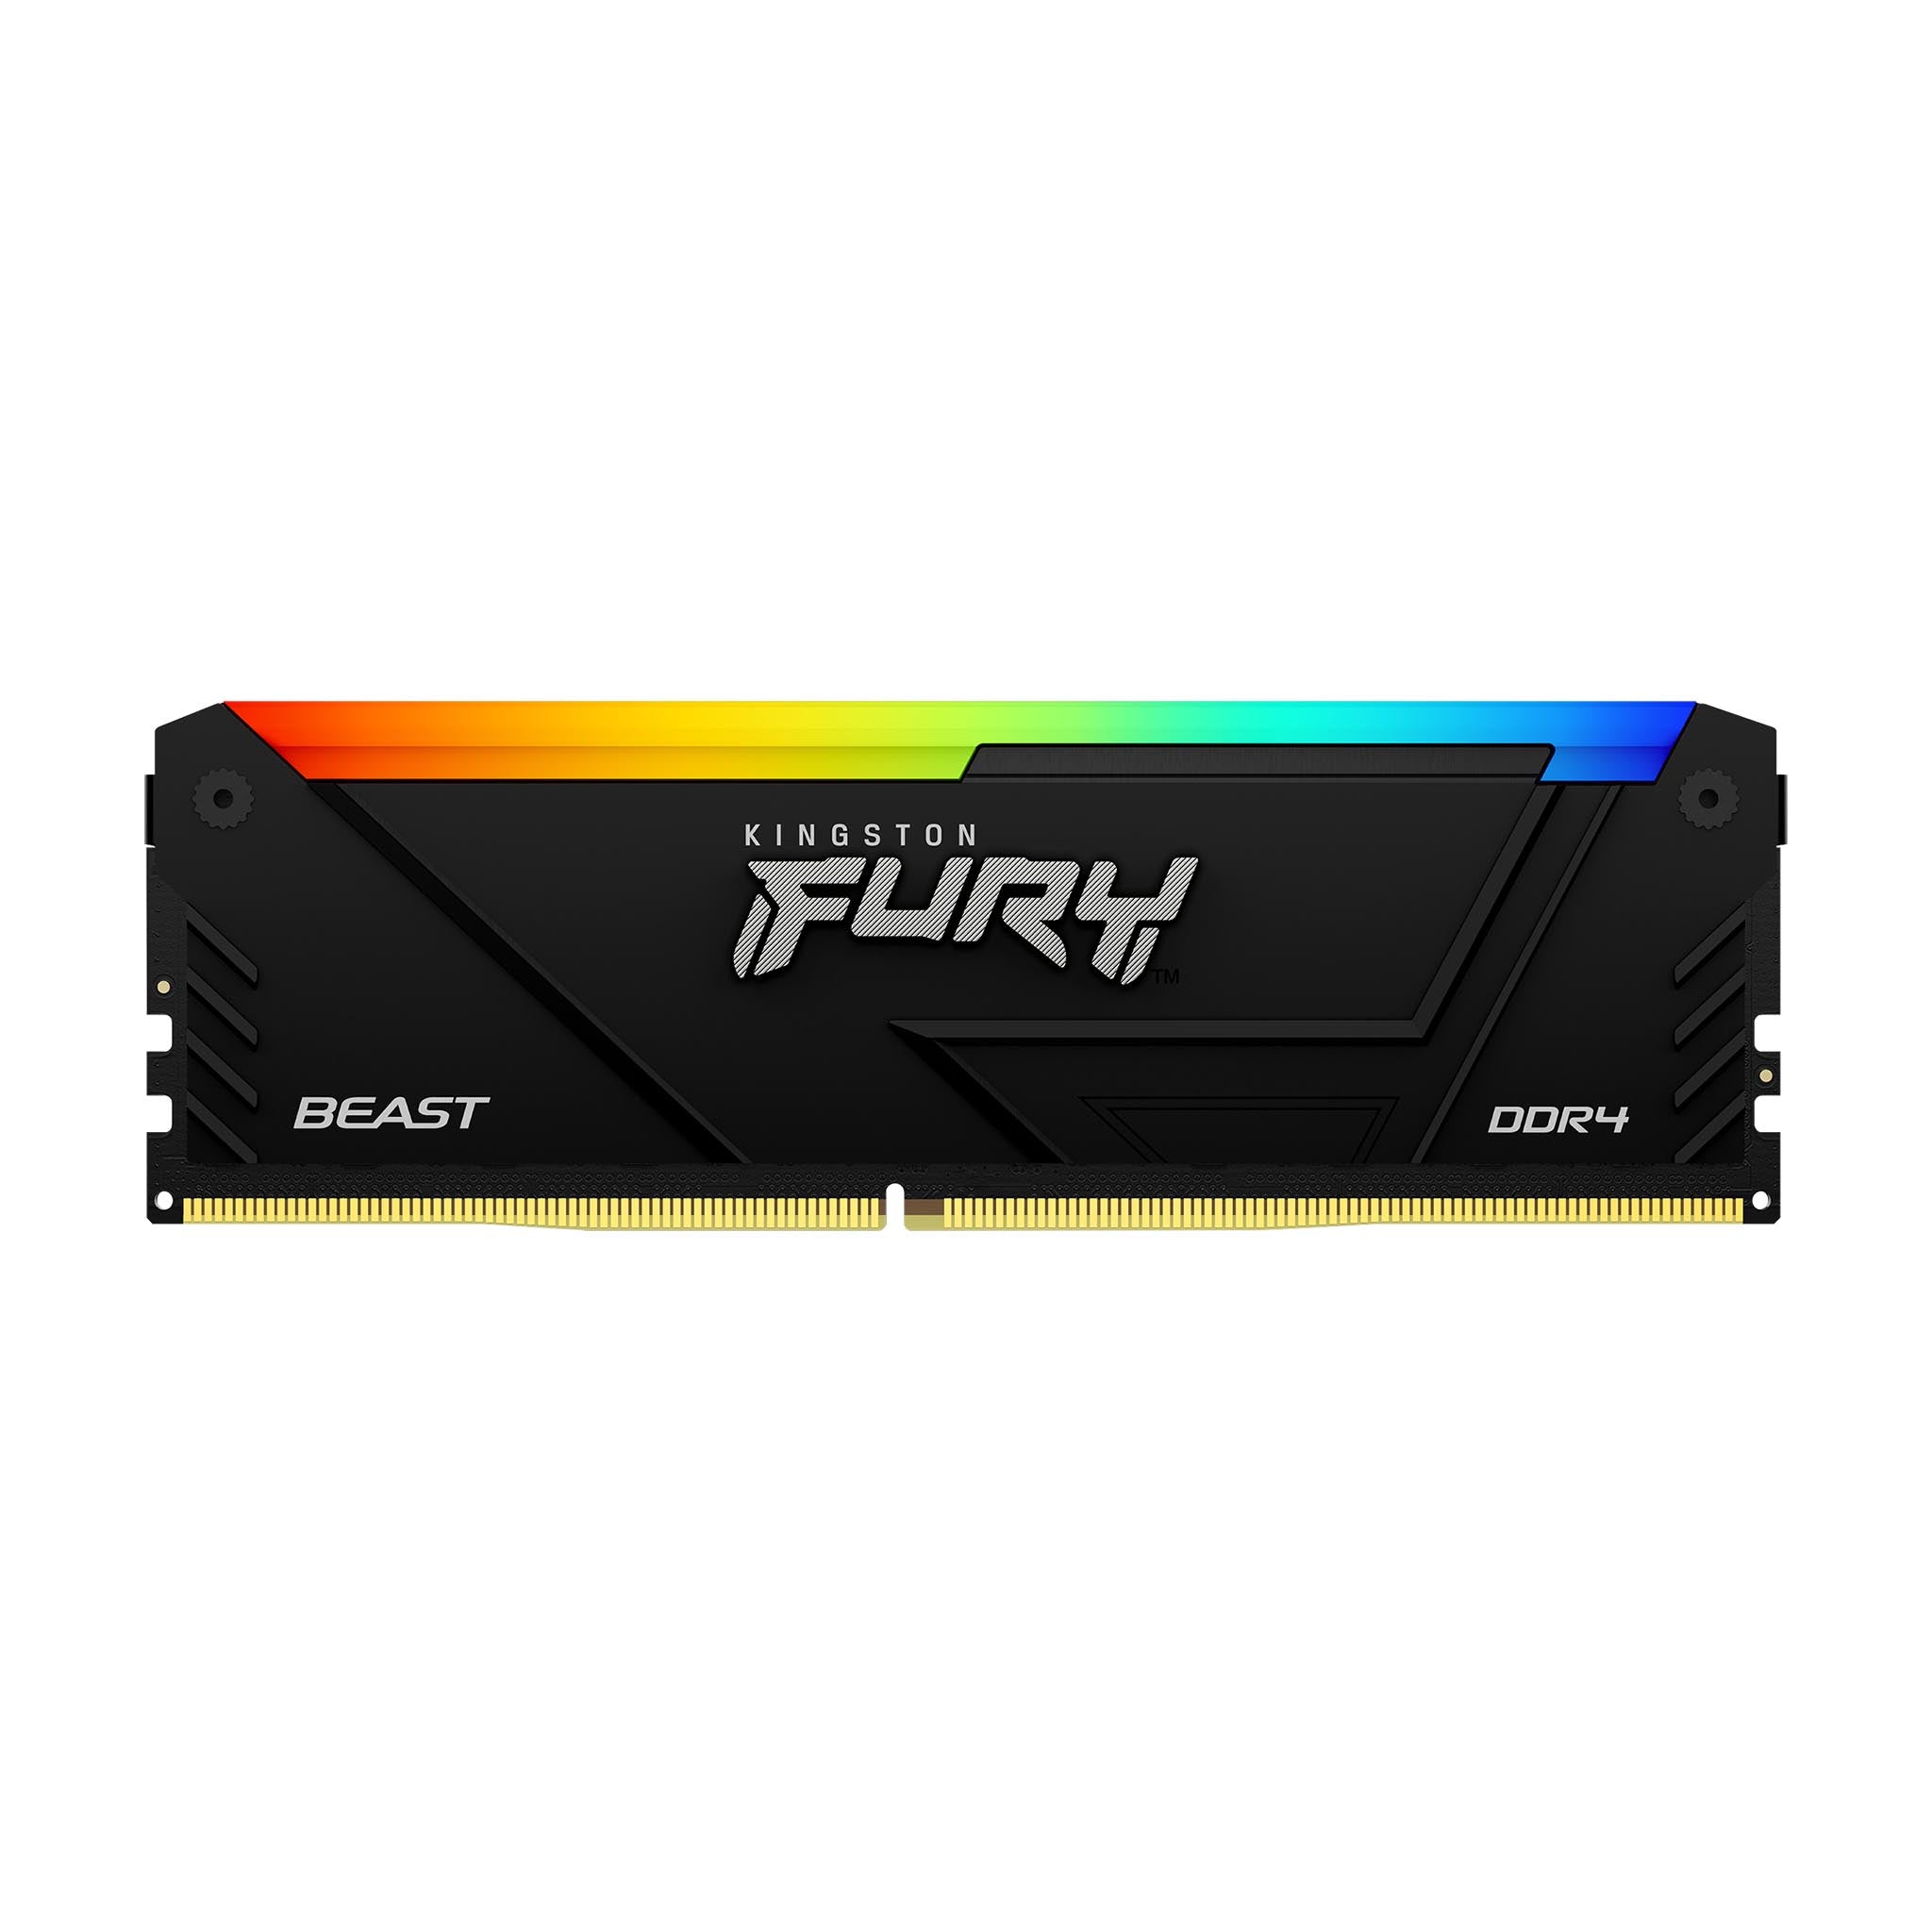 Kingston Fury Beast DDR4 RGB CL16 DIMM Desktop Gaming Memory